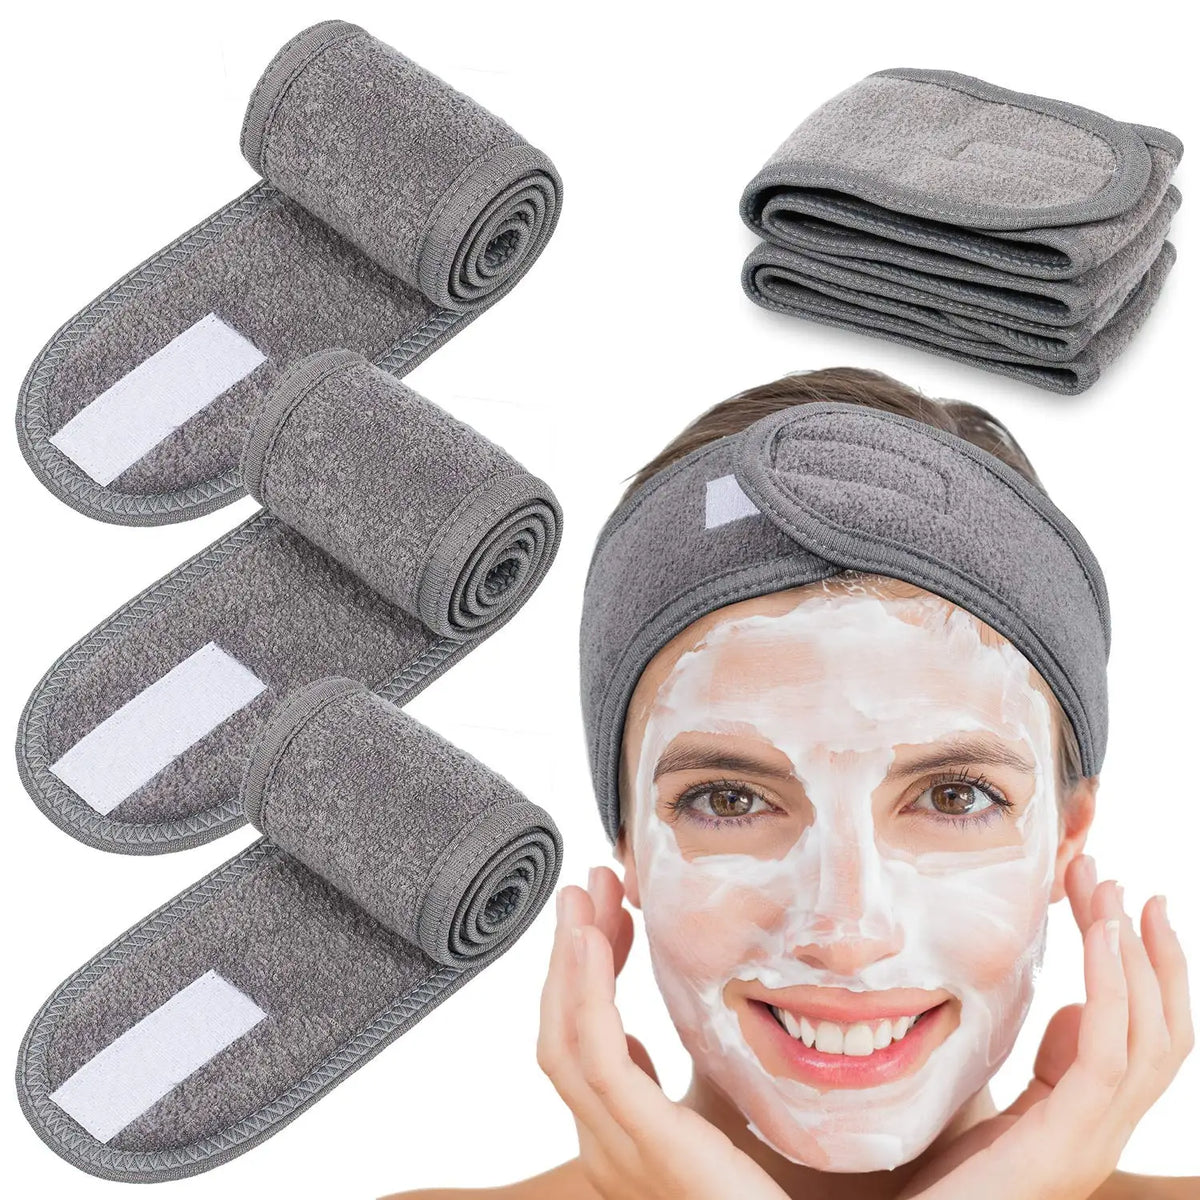 4 Packs Spa Facial Headband Head Wrap Terry Cloth Adjustable Bandanas Shower Hairband Stretch Towel for Bath Make Up Yoga Sport